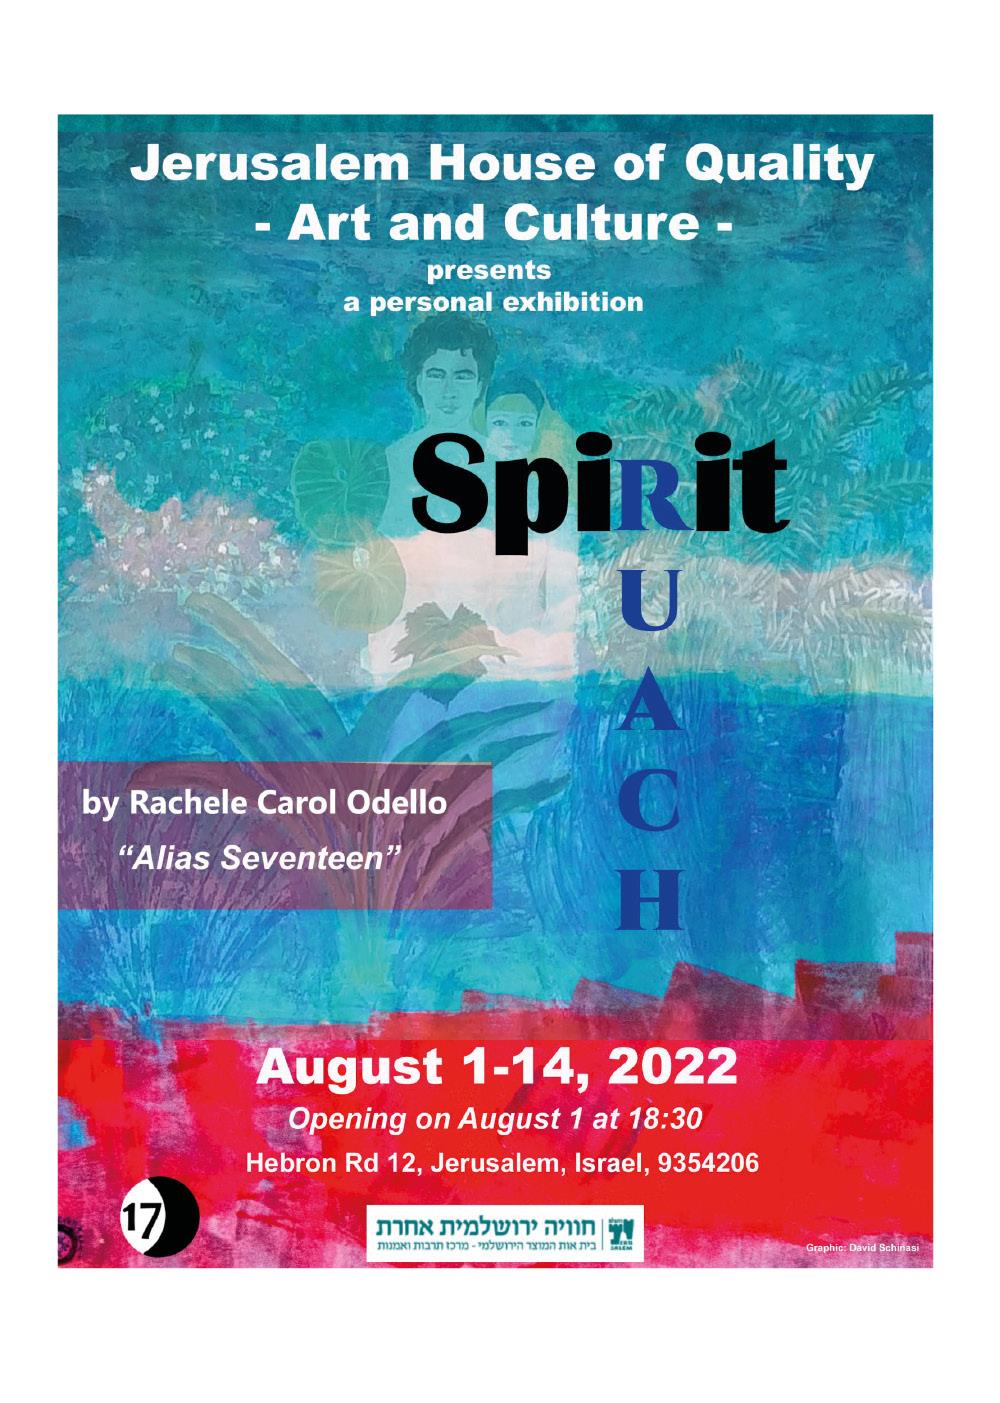 Ruach - Spirit - Personal art exhibition